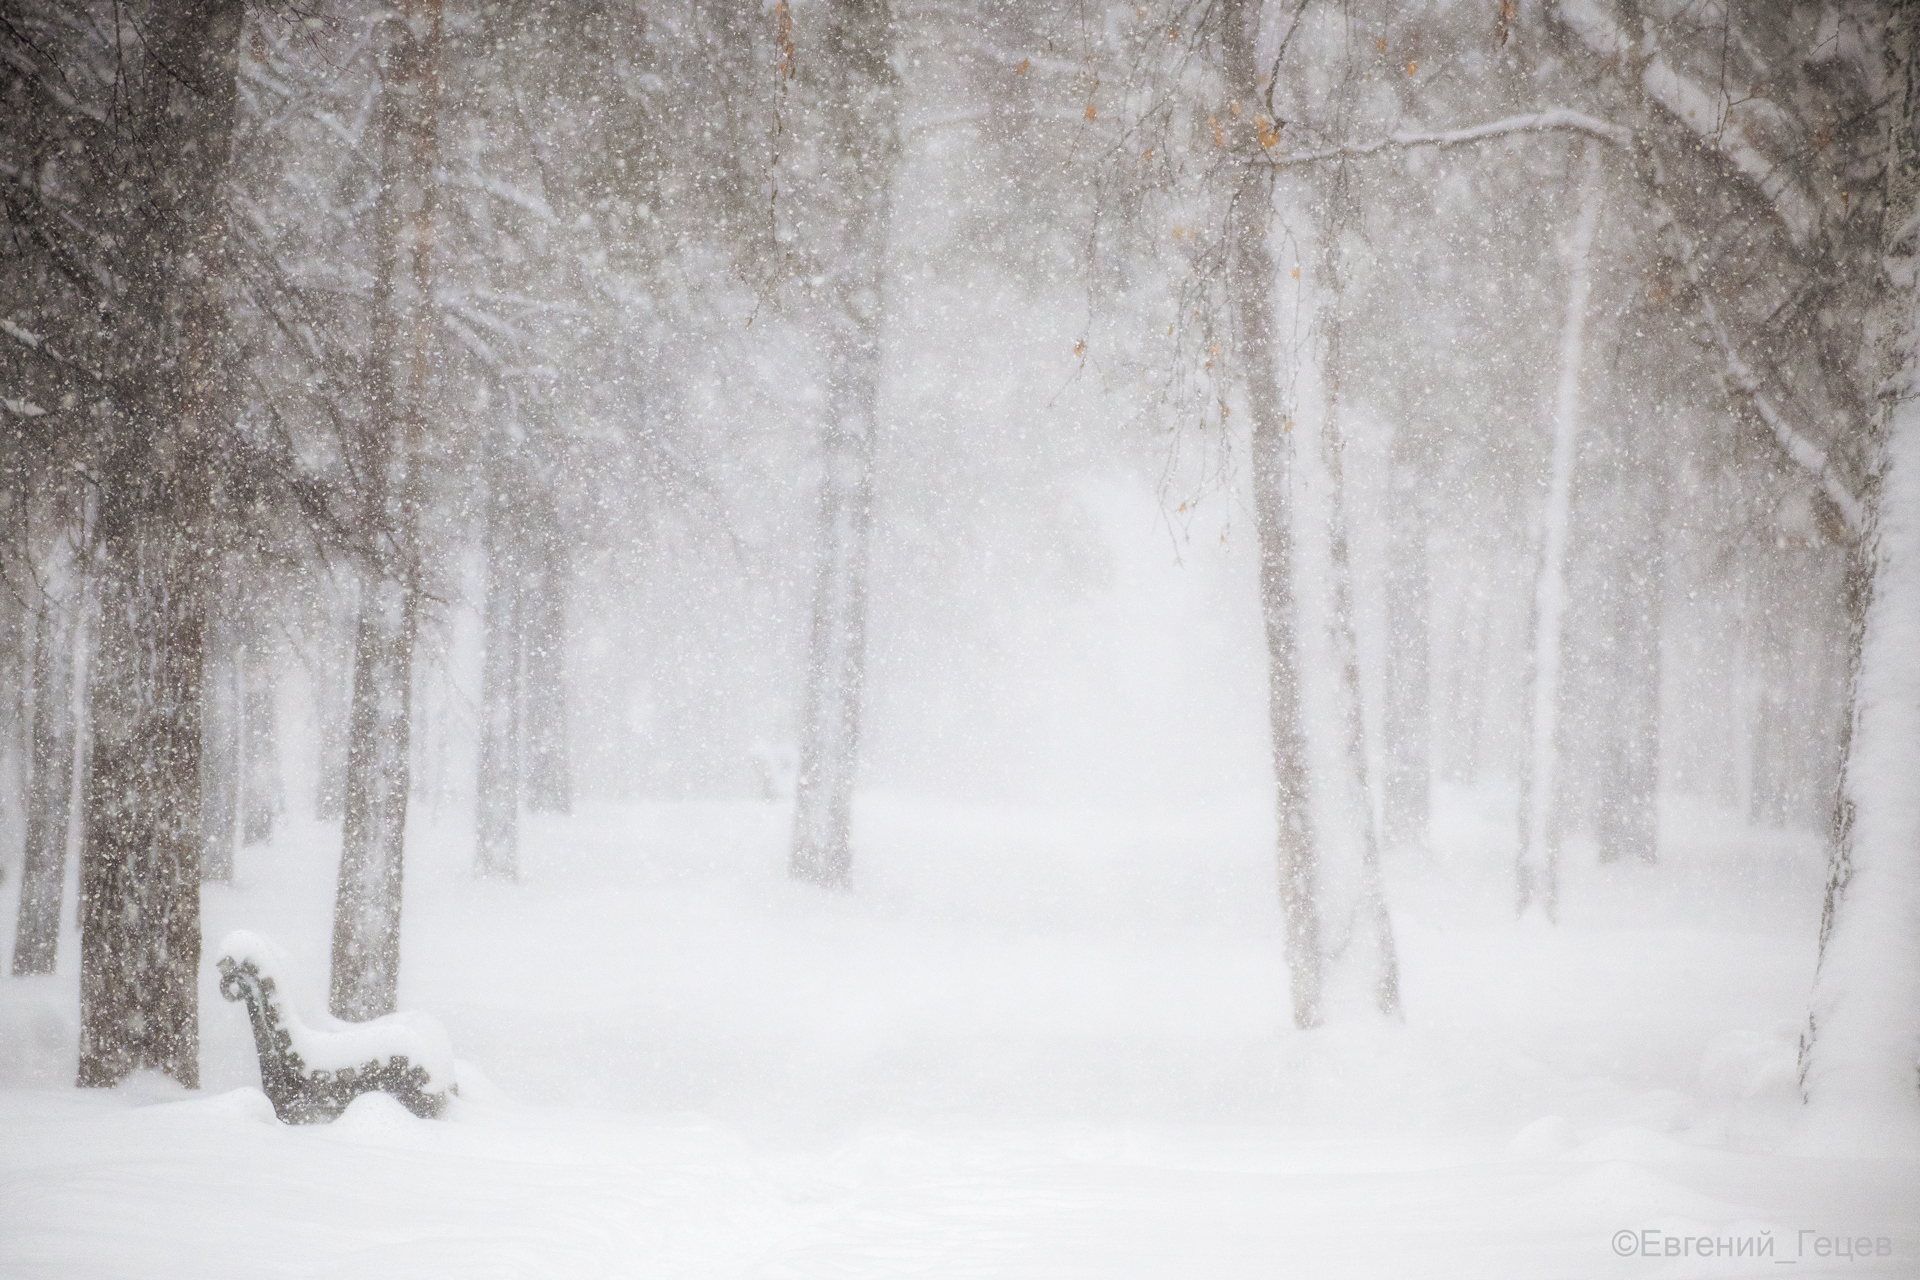 пейзаж, зима, снег, деревья, Евгений Гецев